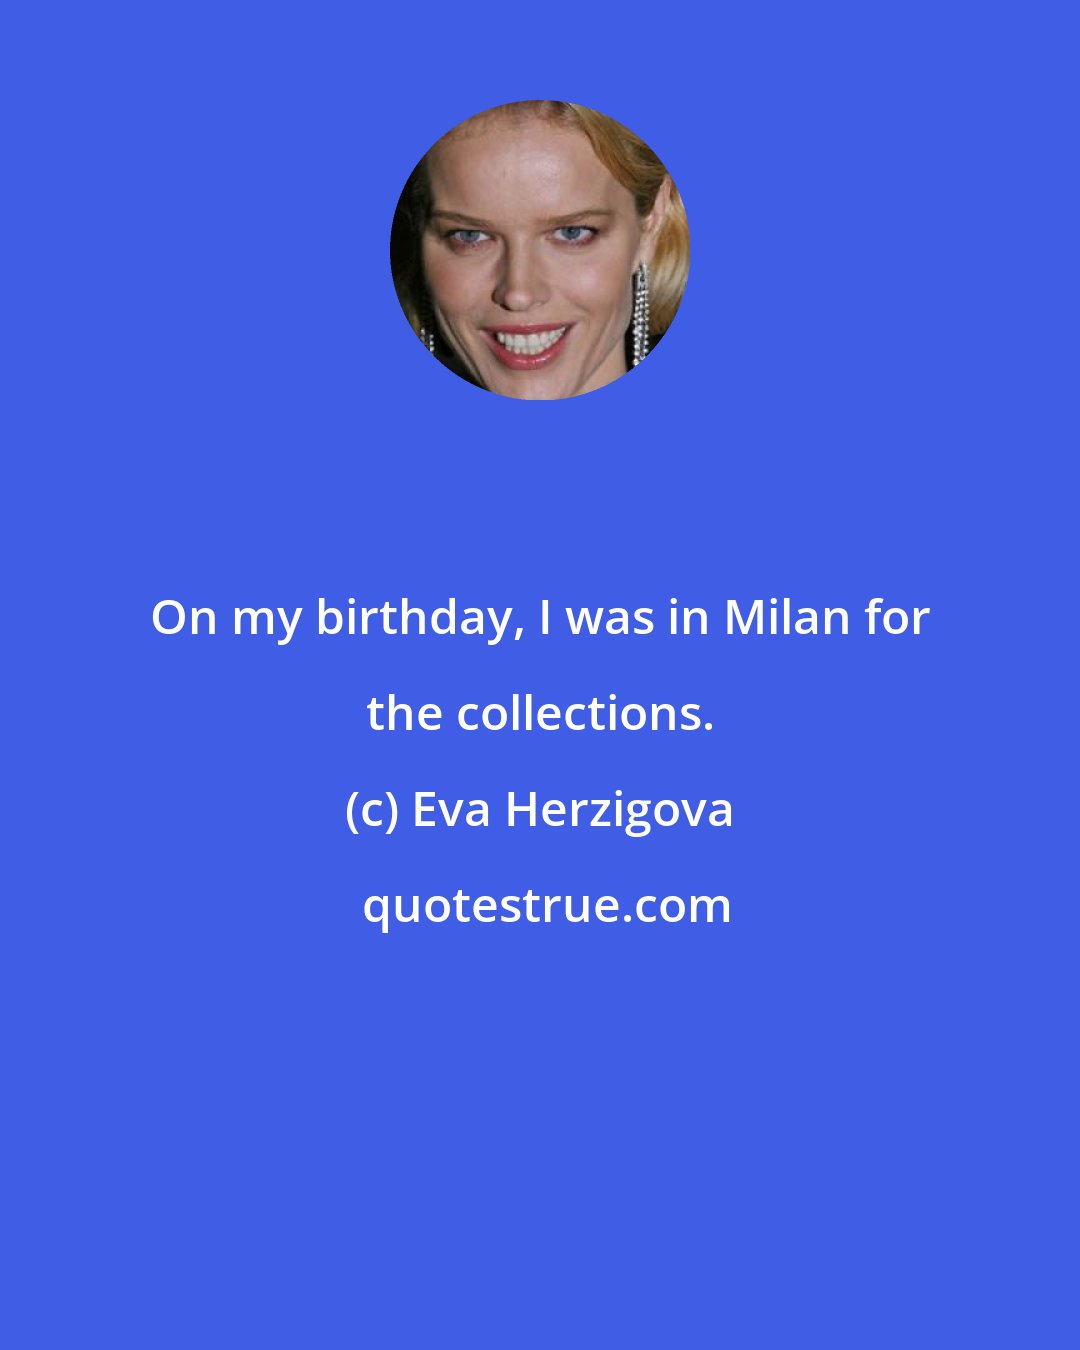 Eva Herzigova: On my birthday, I was in Milan for the collections.